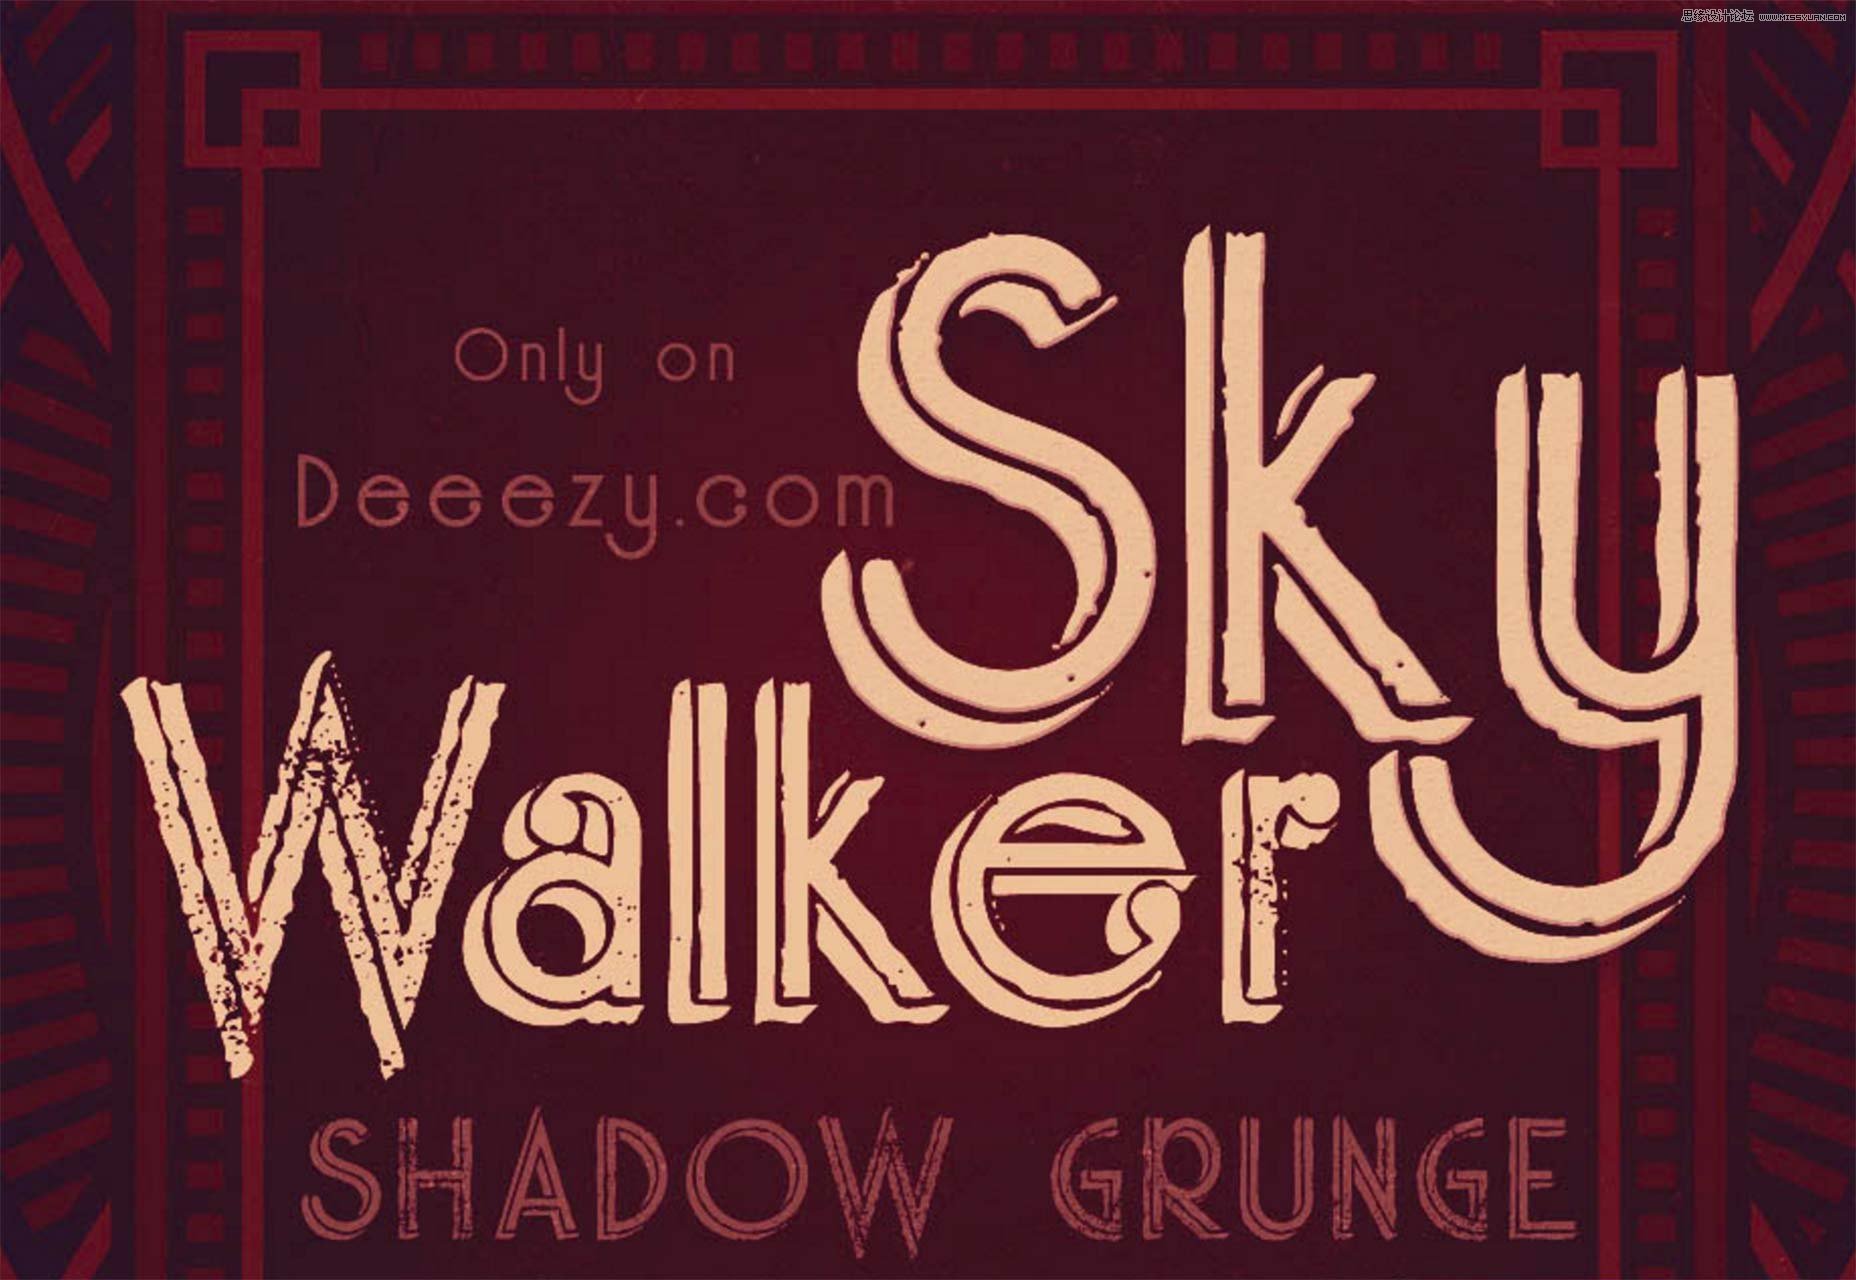 skywalker shadow grunge 是一款装饰风格极强的字体,可以免费